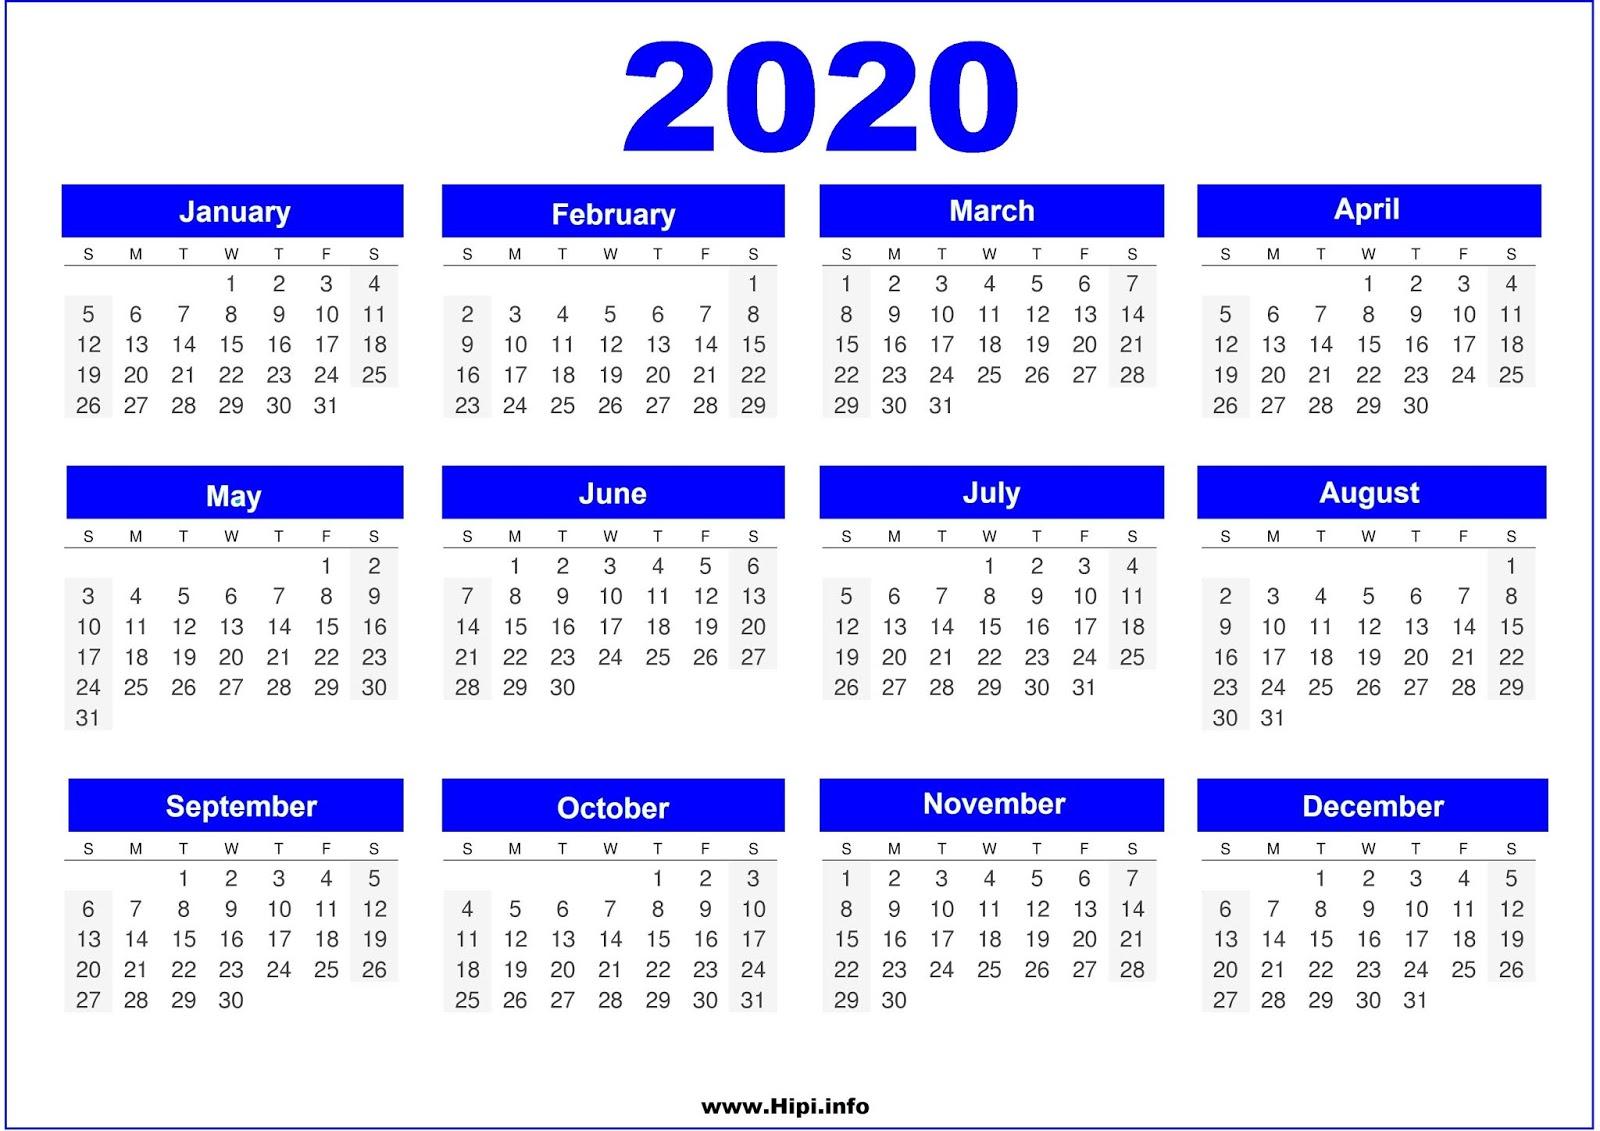 February 2020 Calendar Wallpapers - Wallpaper Cave